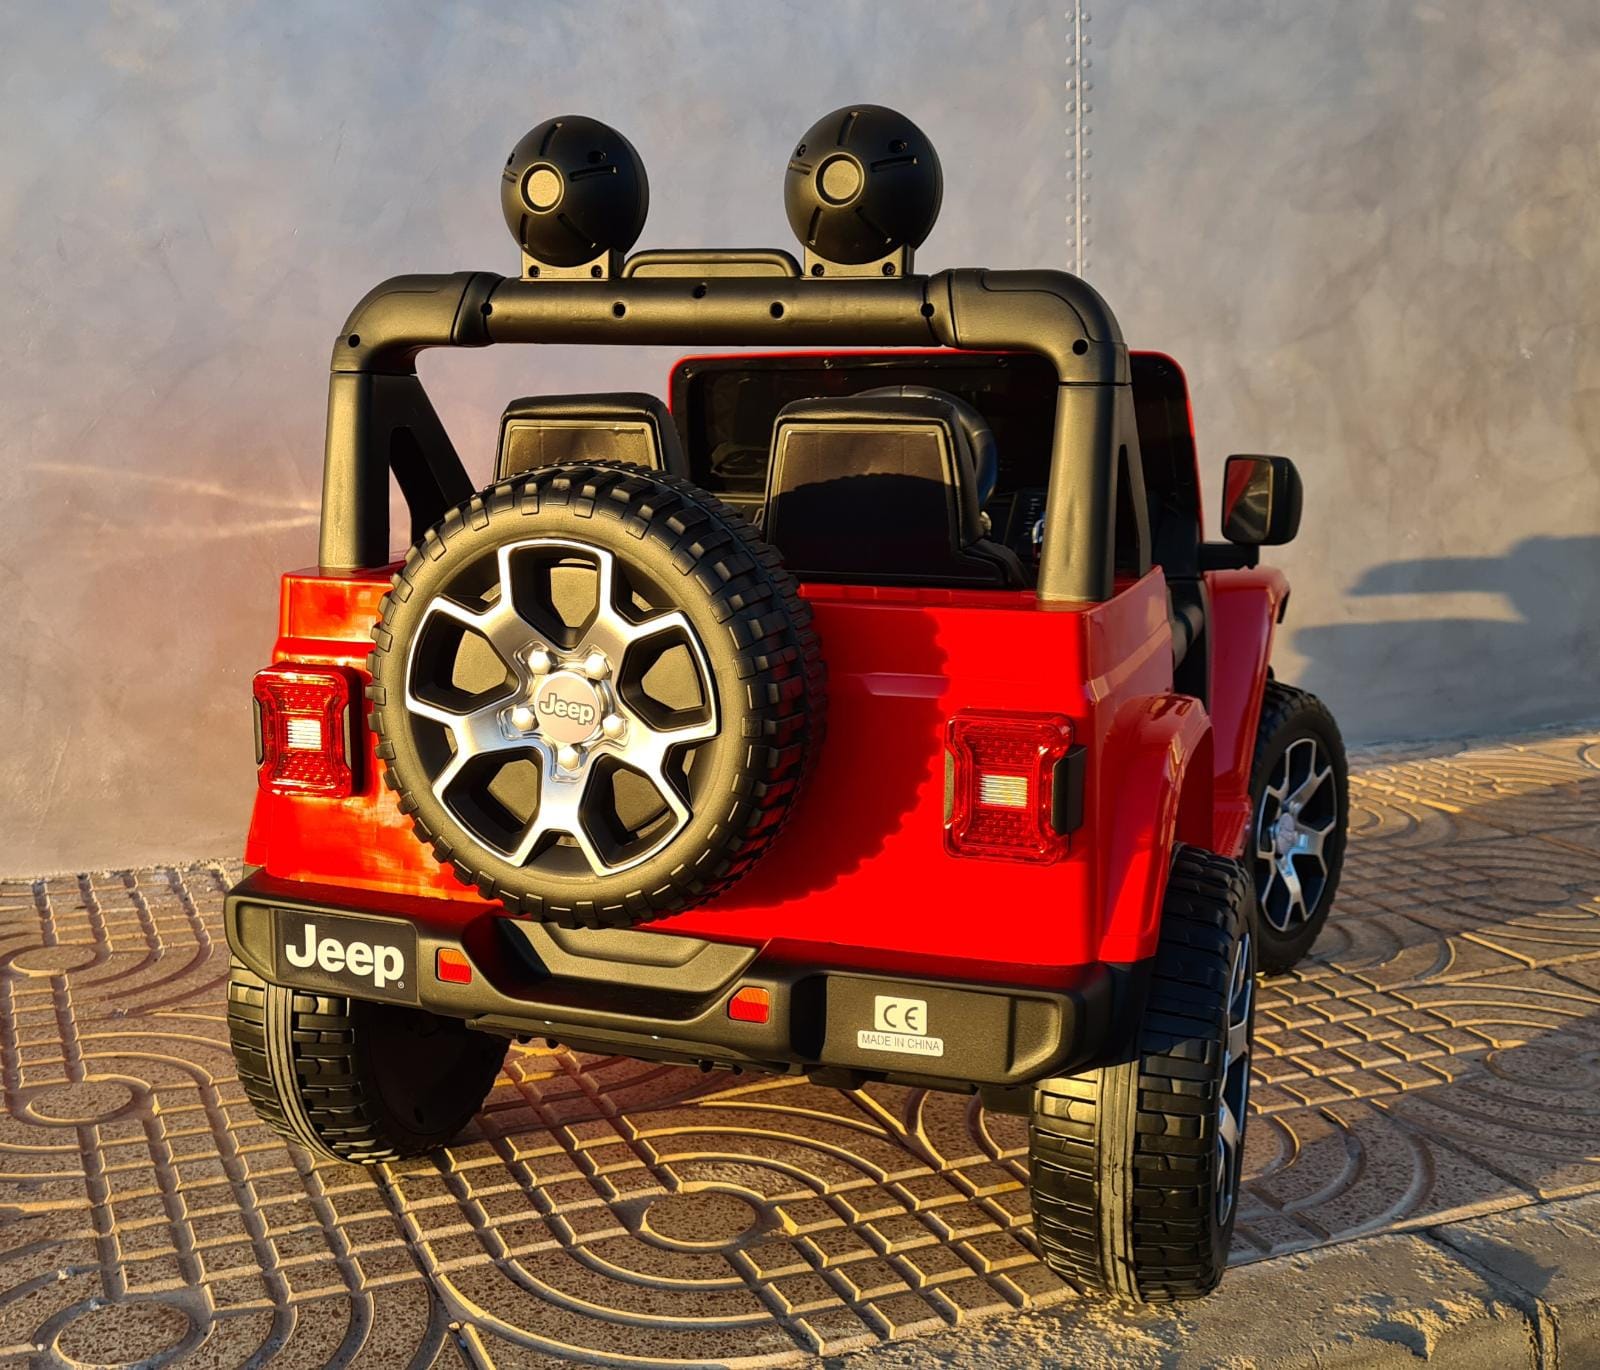 Full Option Mando Radio Control Parental Rojo Mando RC Indalchess Jeep RUBIC/ÓN 12V para NI/ÑOS 4 Motores